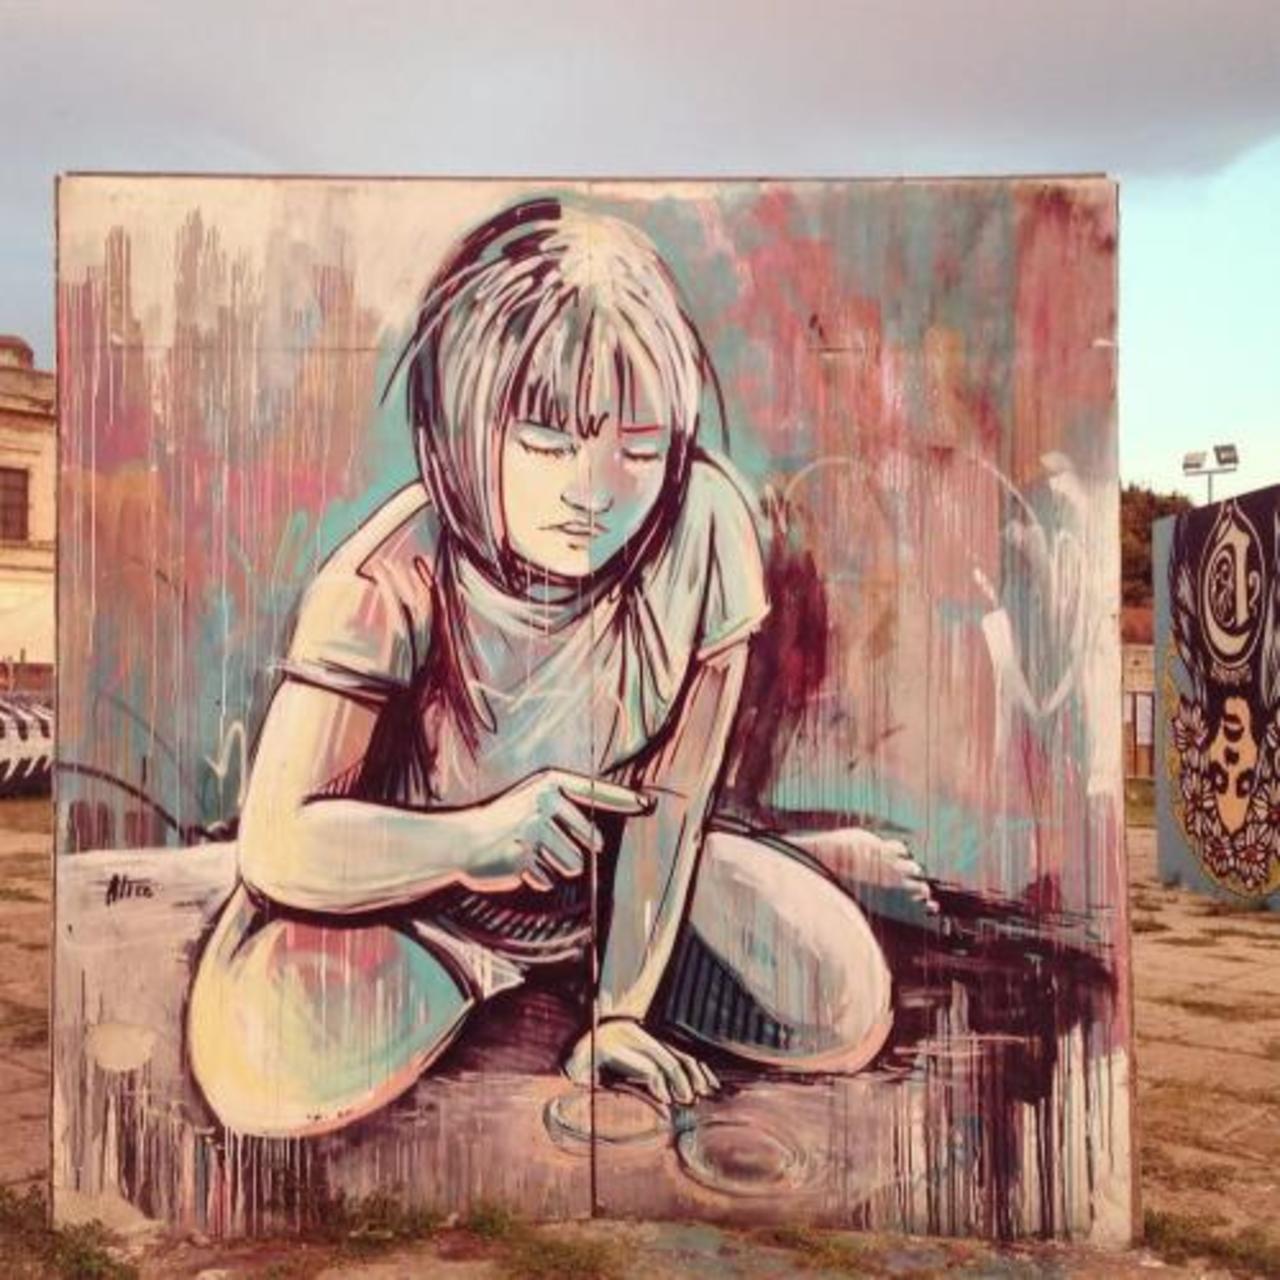 RT @alicepasquini: #Alice 
_
#streetart #art #murales #graffiti #painting #street... http://ift.tt/1jncL5o #alicepasquini http://t.co/hdP2doqXqn